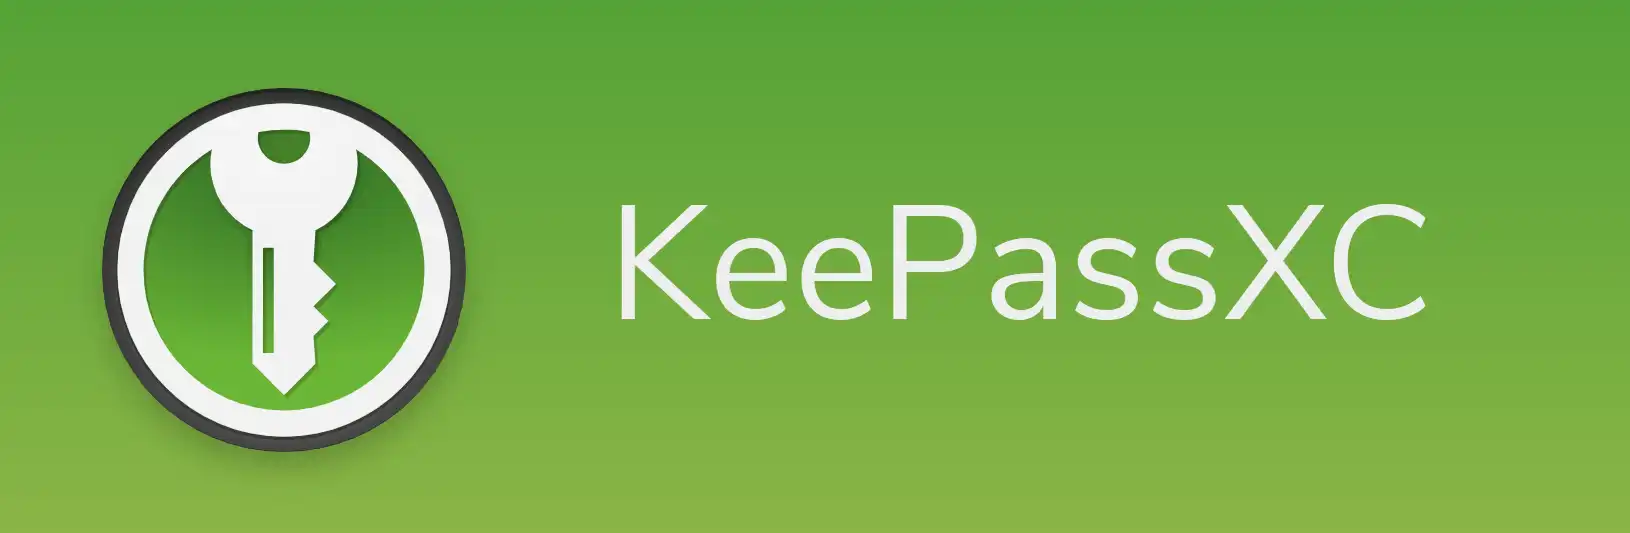 KeePassXC – بهترین مدیر رمز عبور رایگان برای استفاده آسان آفلاین